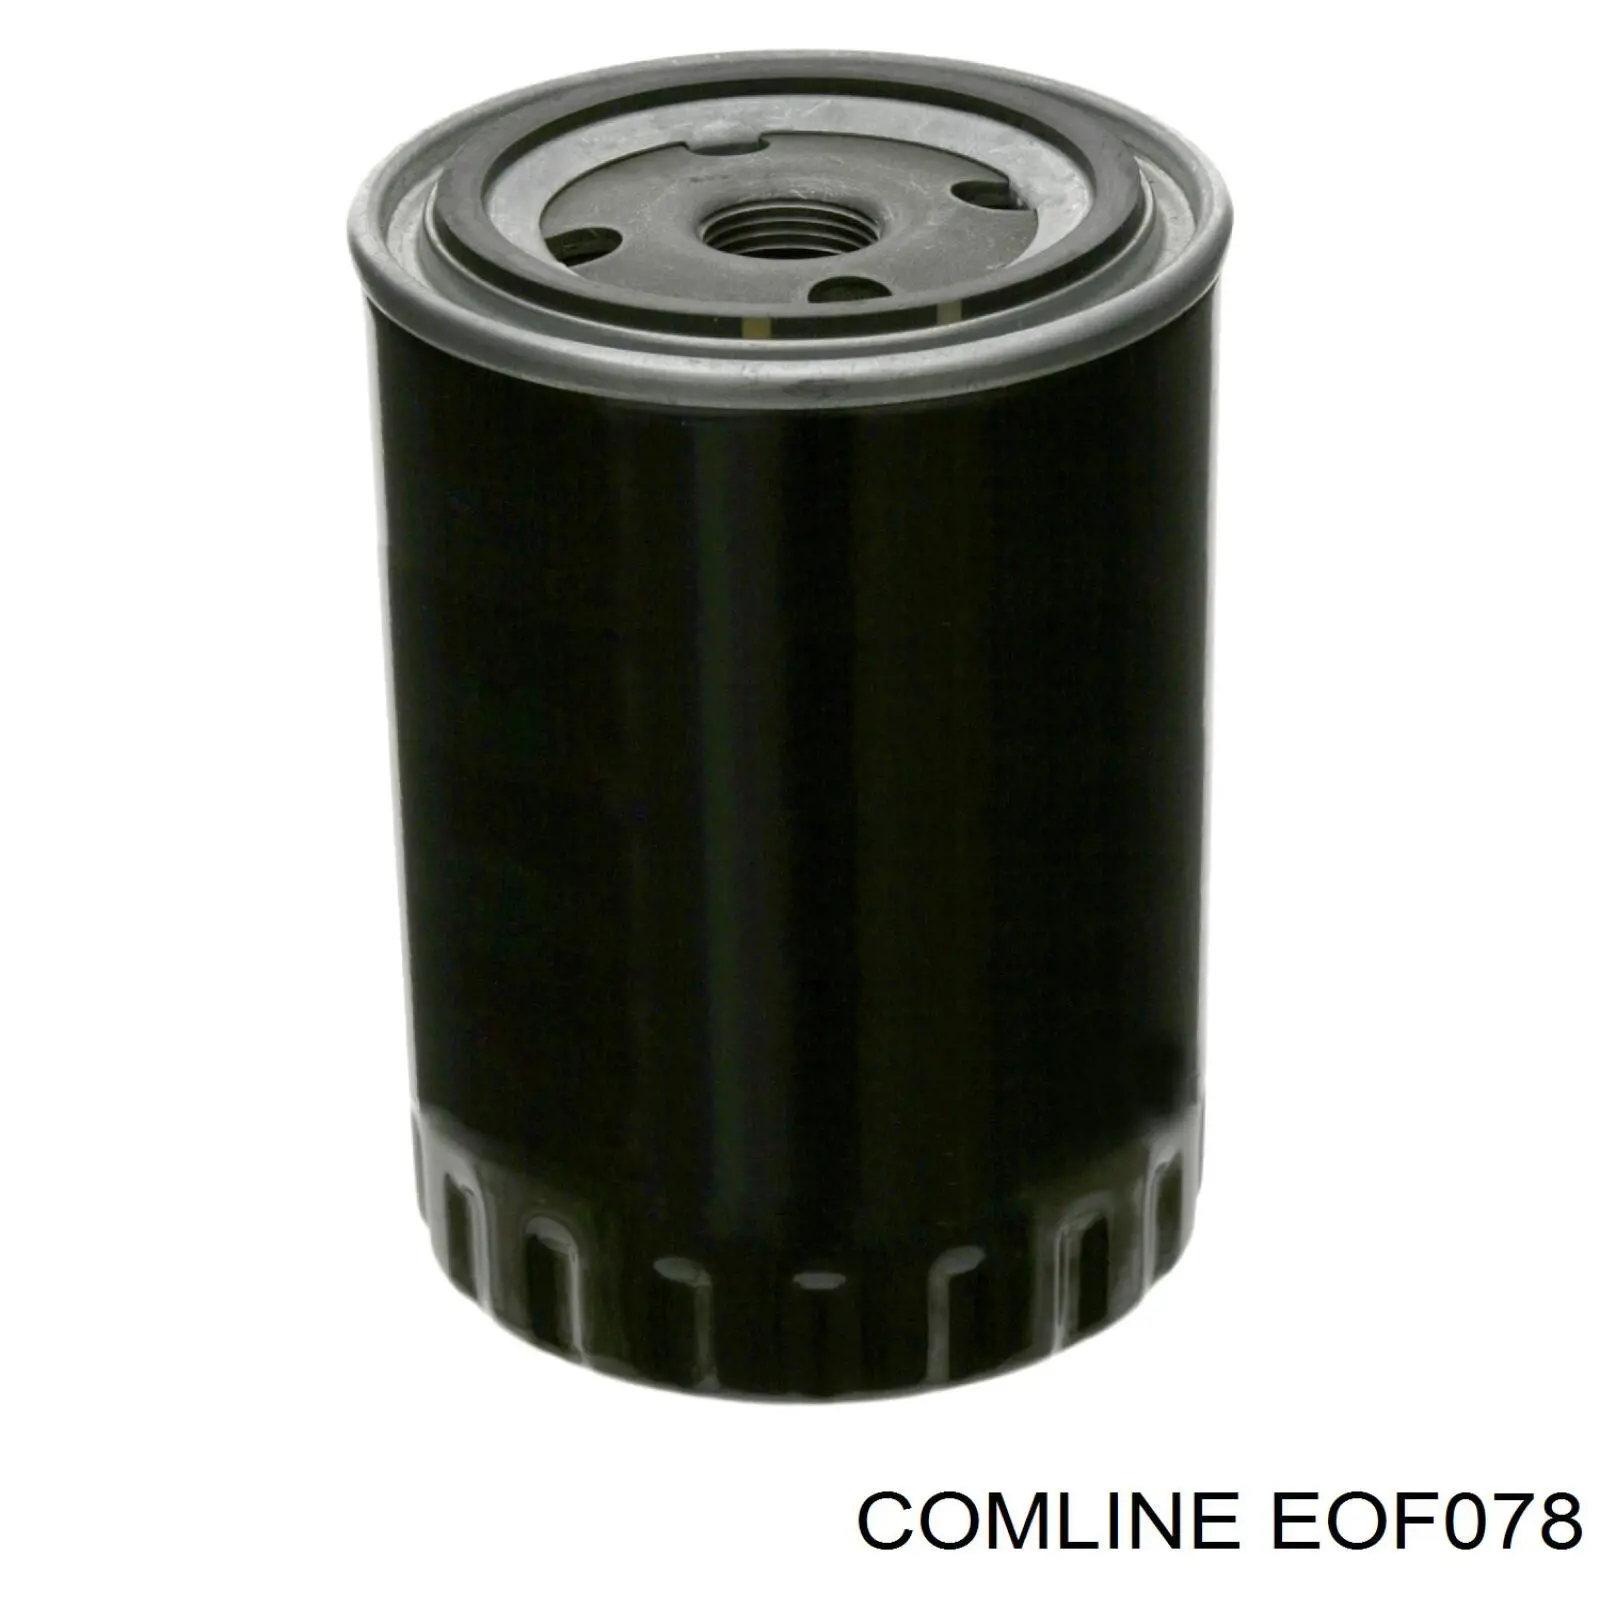 EOF078 Comline filtro de aceite